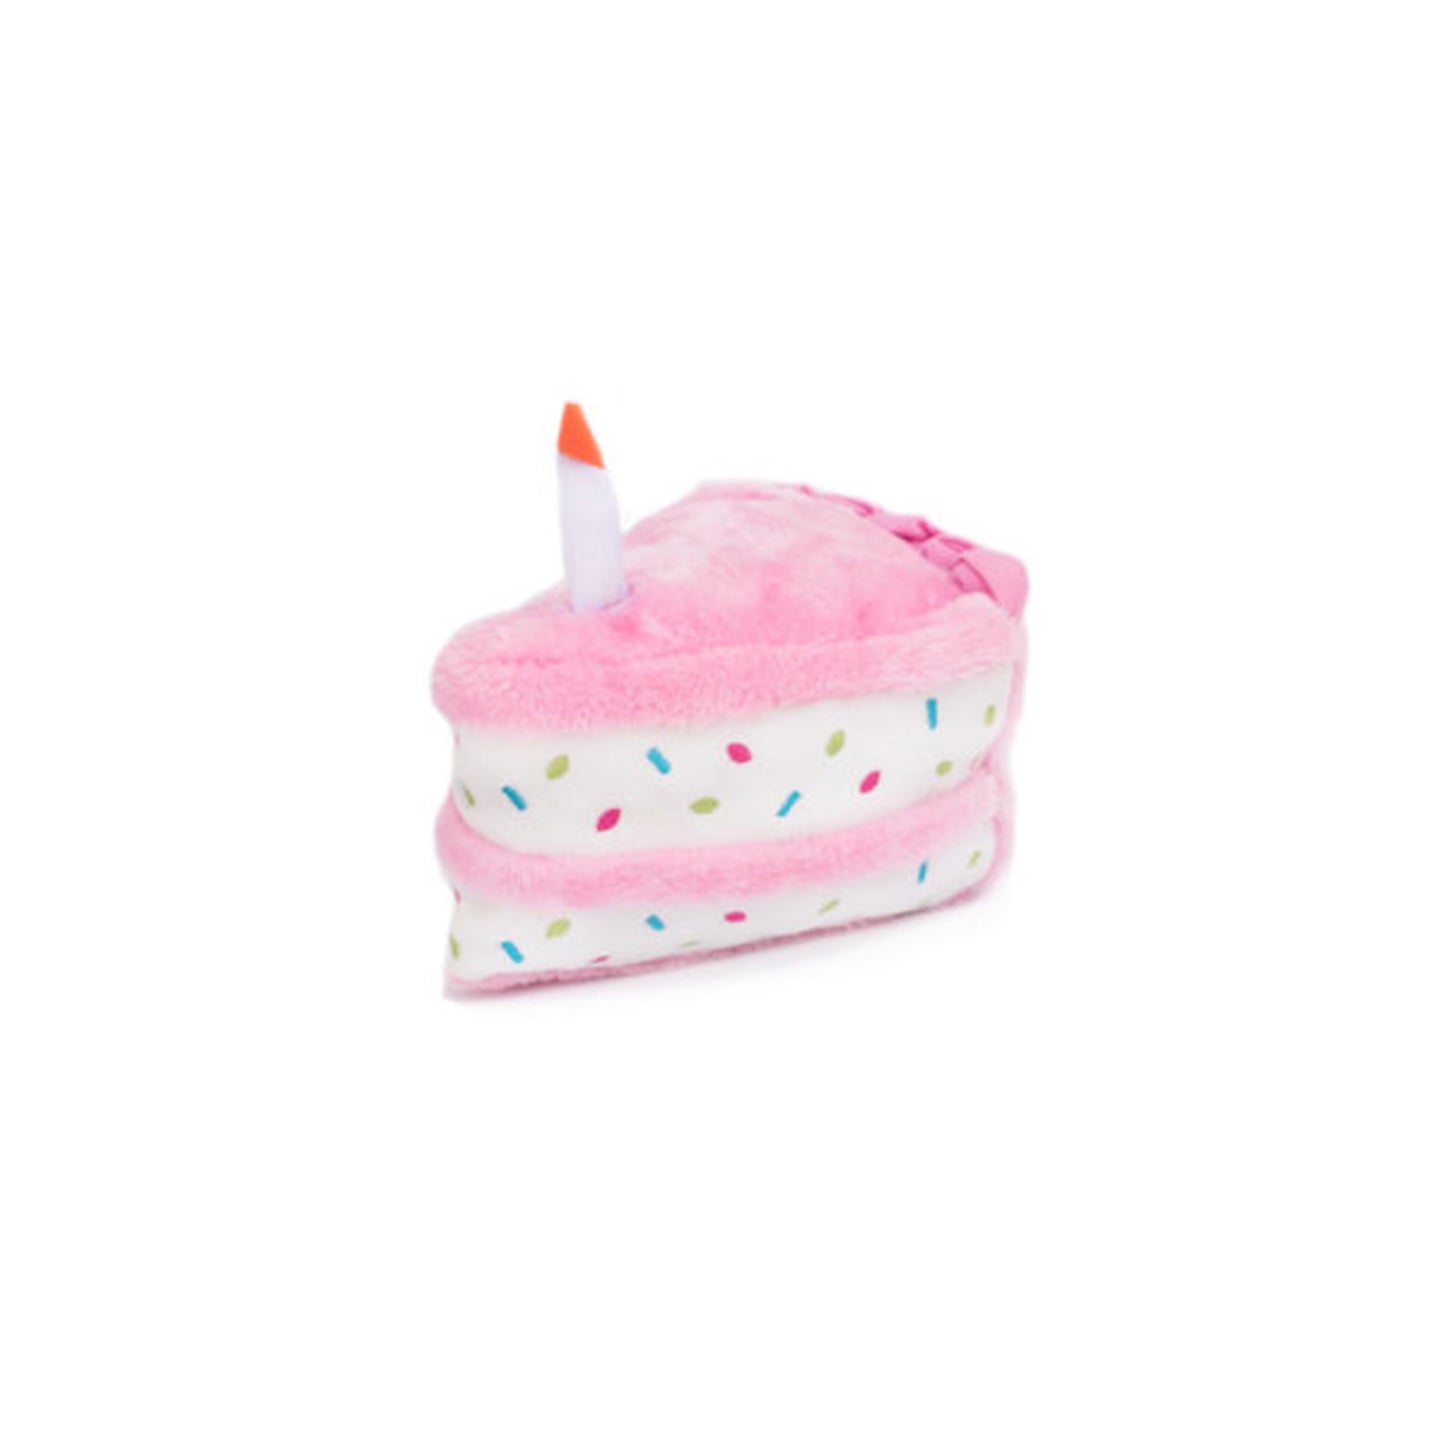 NomNomz, Cupcakes, Birthday Cakes, Squeakie Pads, Skinny Peltz, & Squeakie Buddies